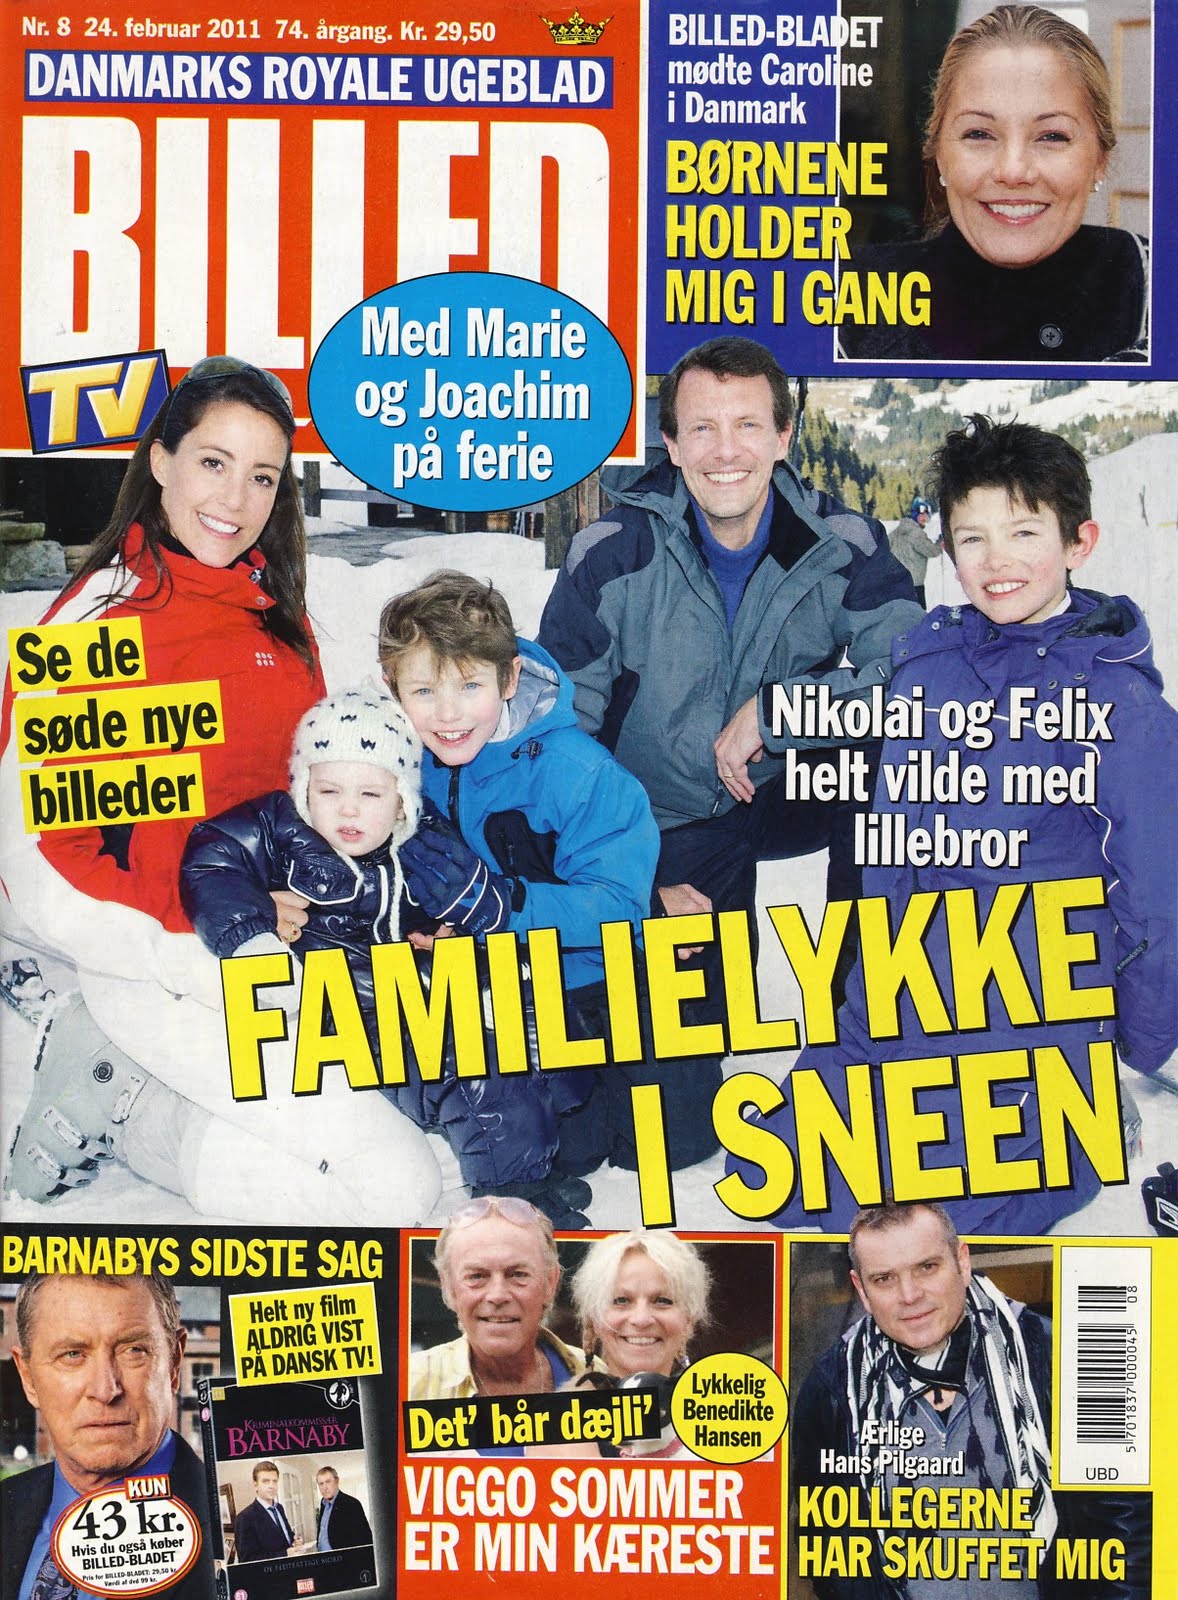 Danish Royal Media Watch Billed Bladet #8 Schackenborg in the snow photo